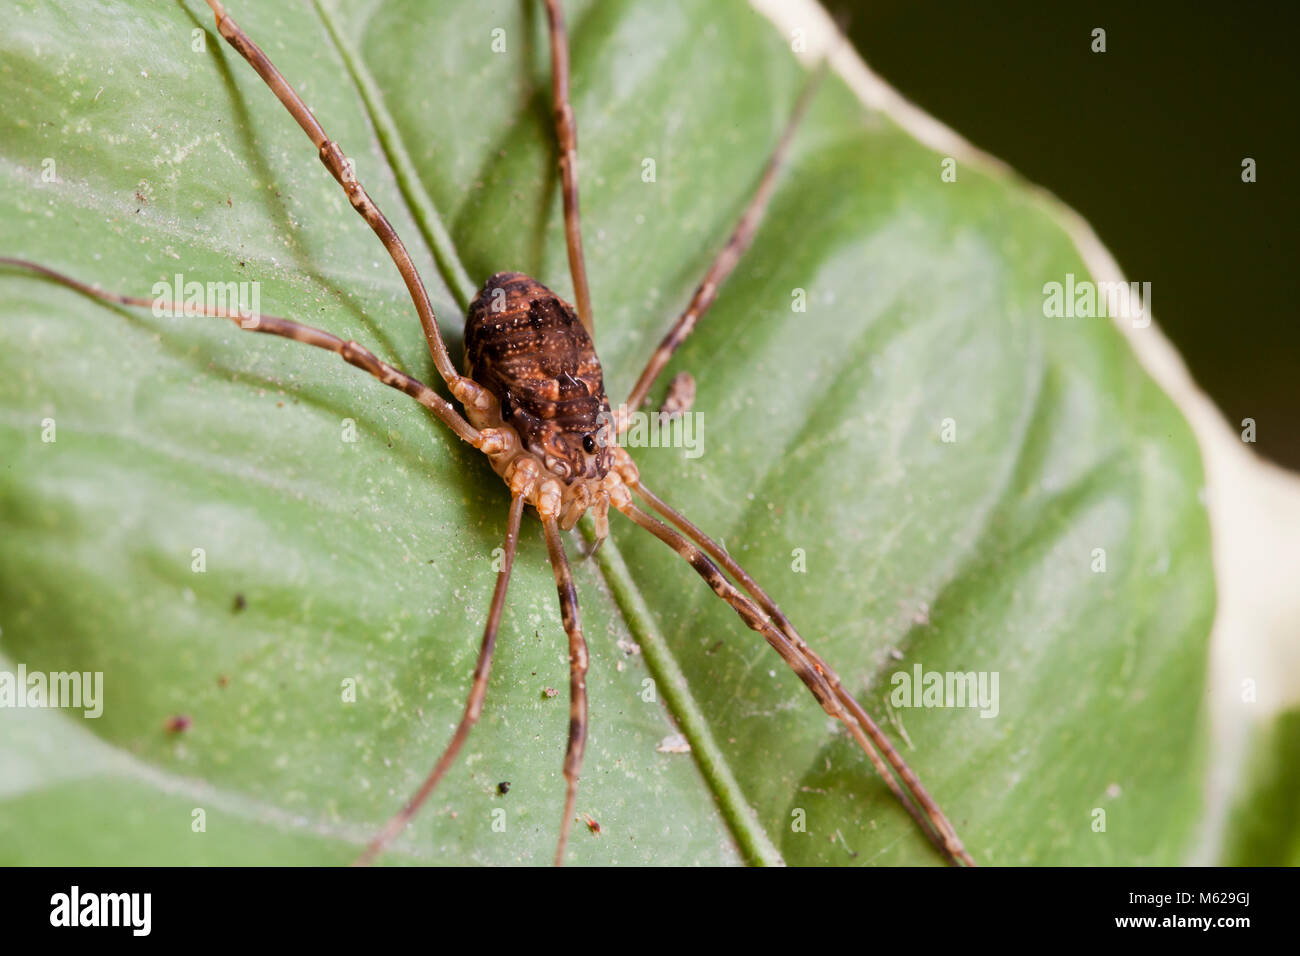 Harvestmen spider (Leiobunum vittatum) aka daddy long legs, granddaddy longlegs spider, carpenter spider, daddy long-legs, or vibrating spider - USA Stock Photo